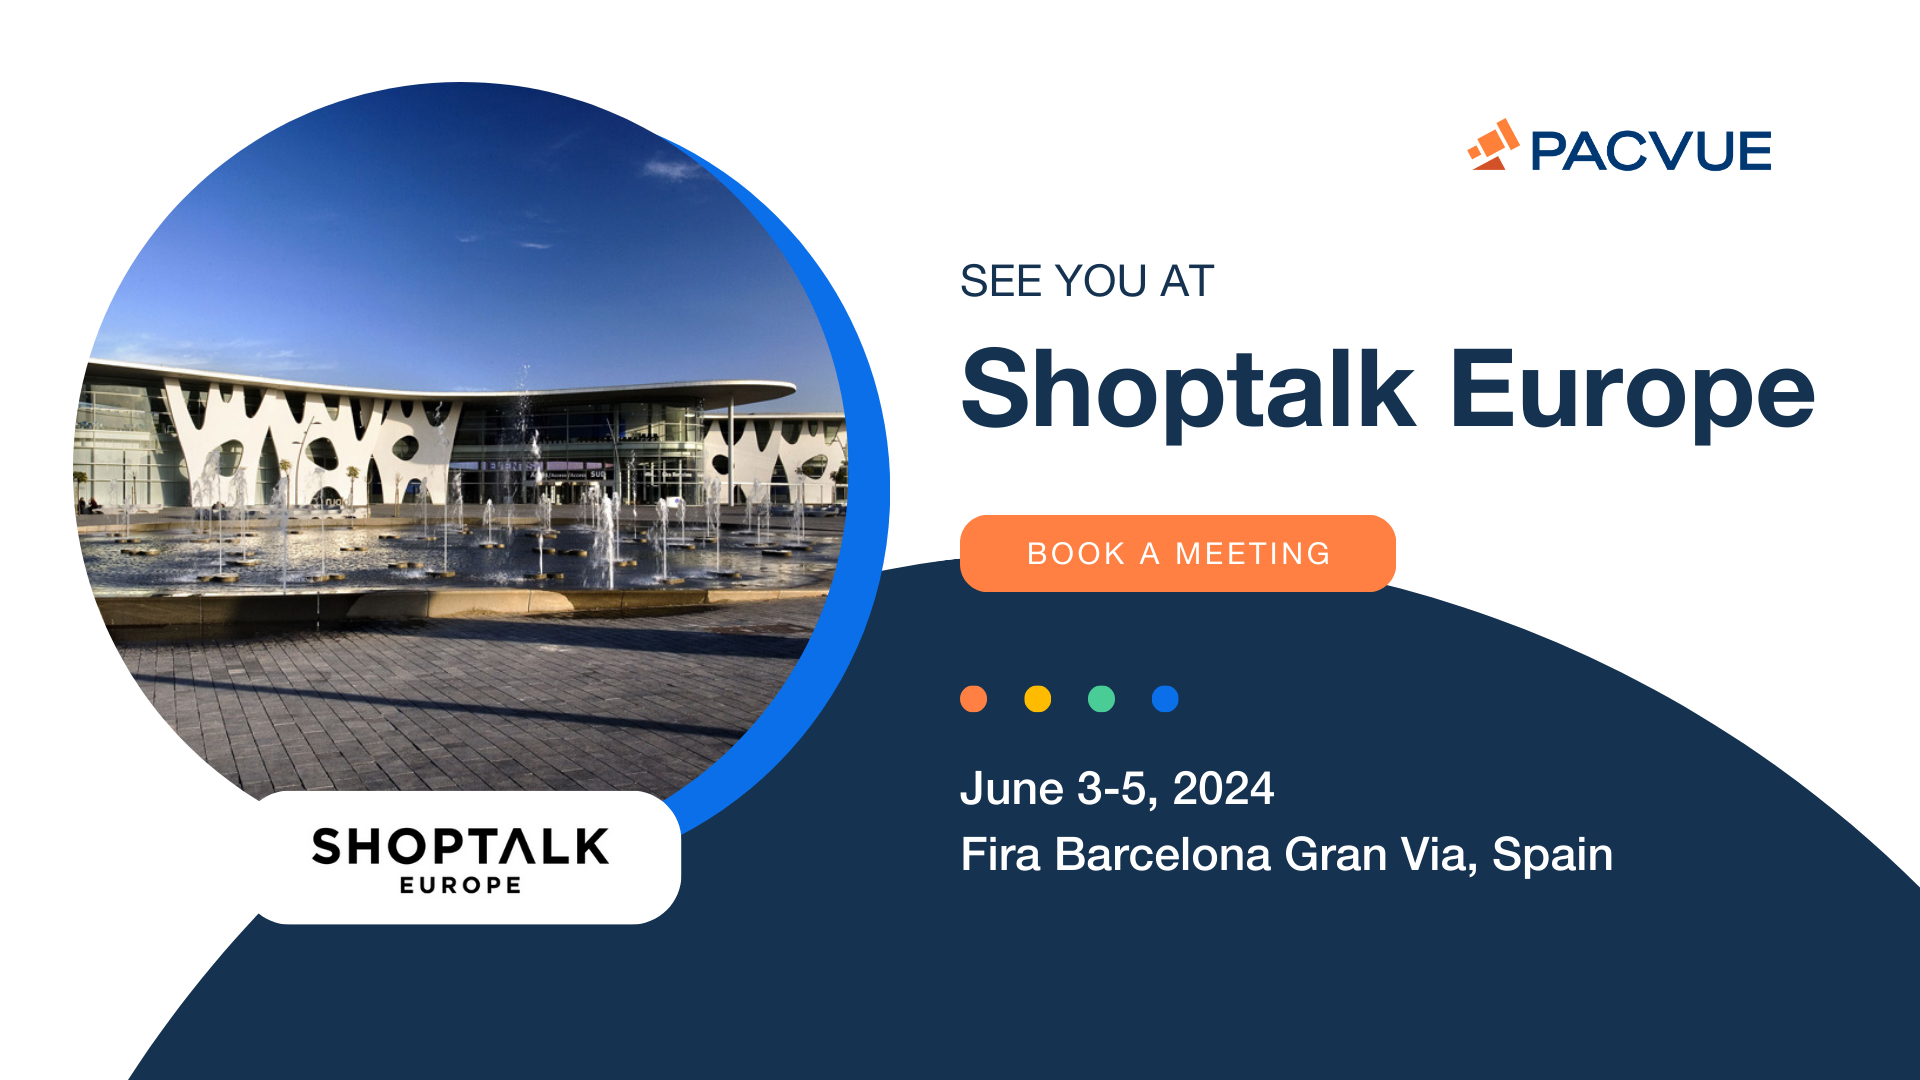 Pacvue at Shoptalk Europe 3-5 June 2024 in Barcelona